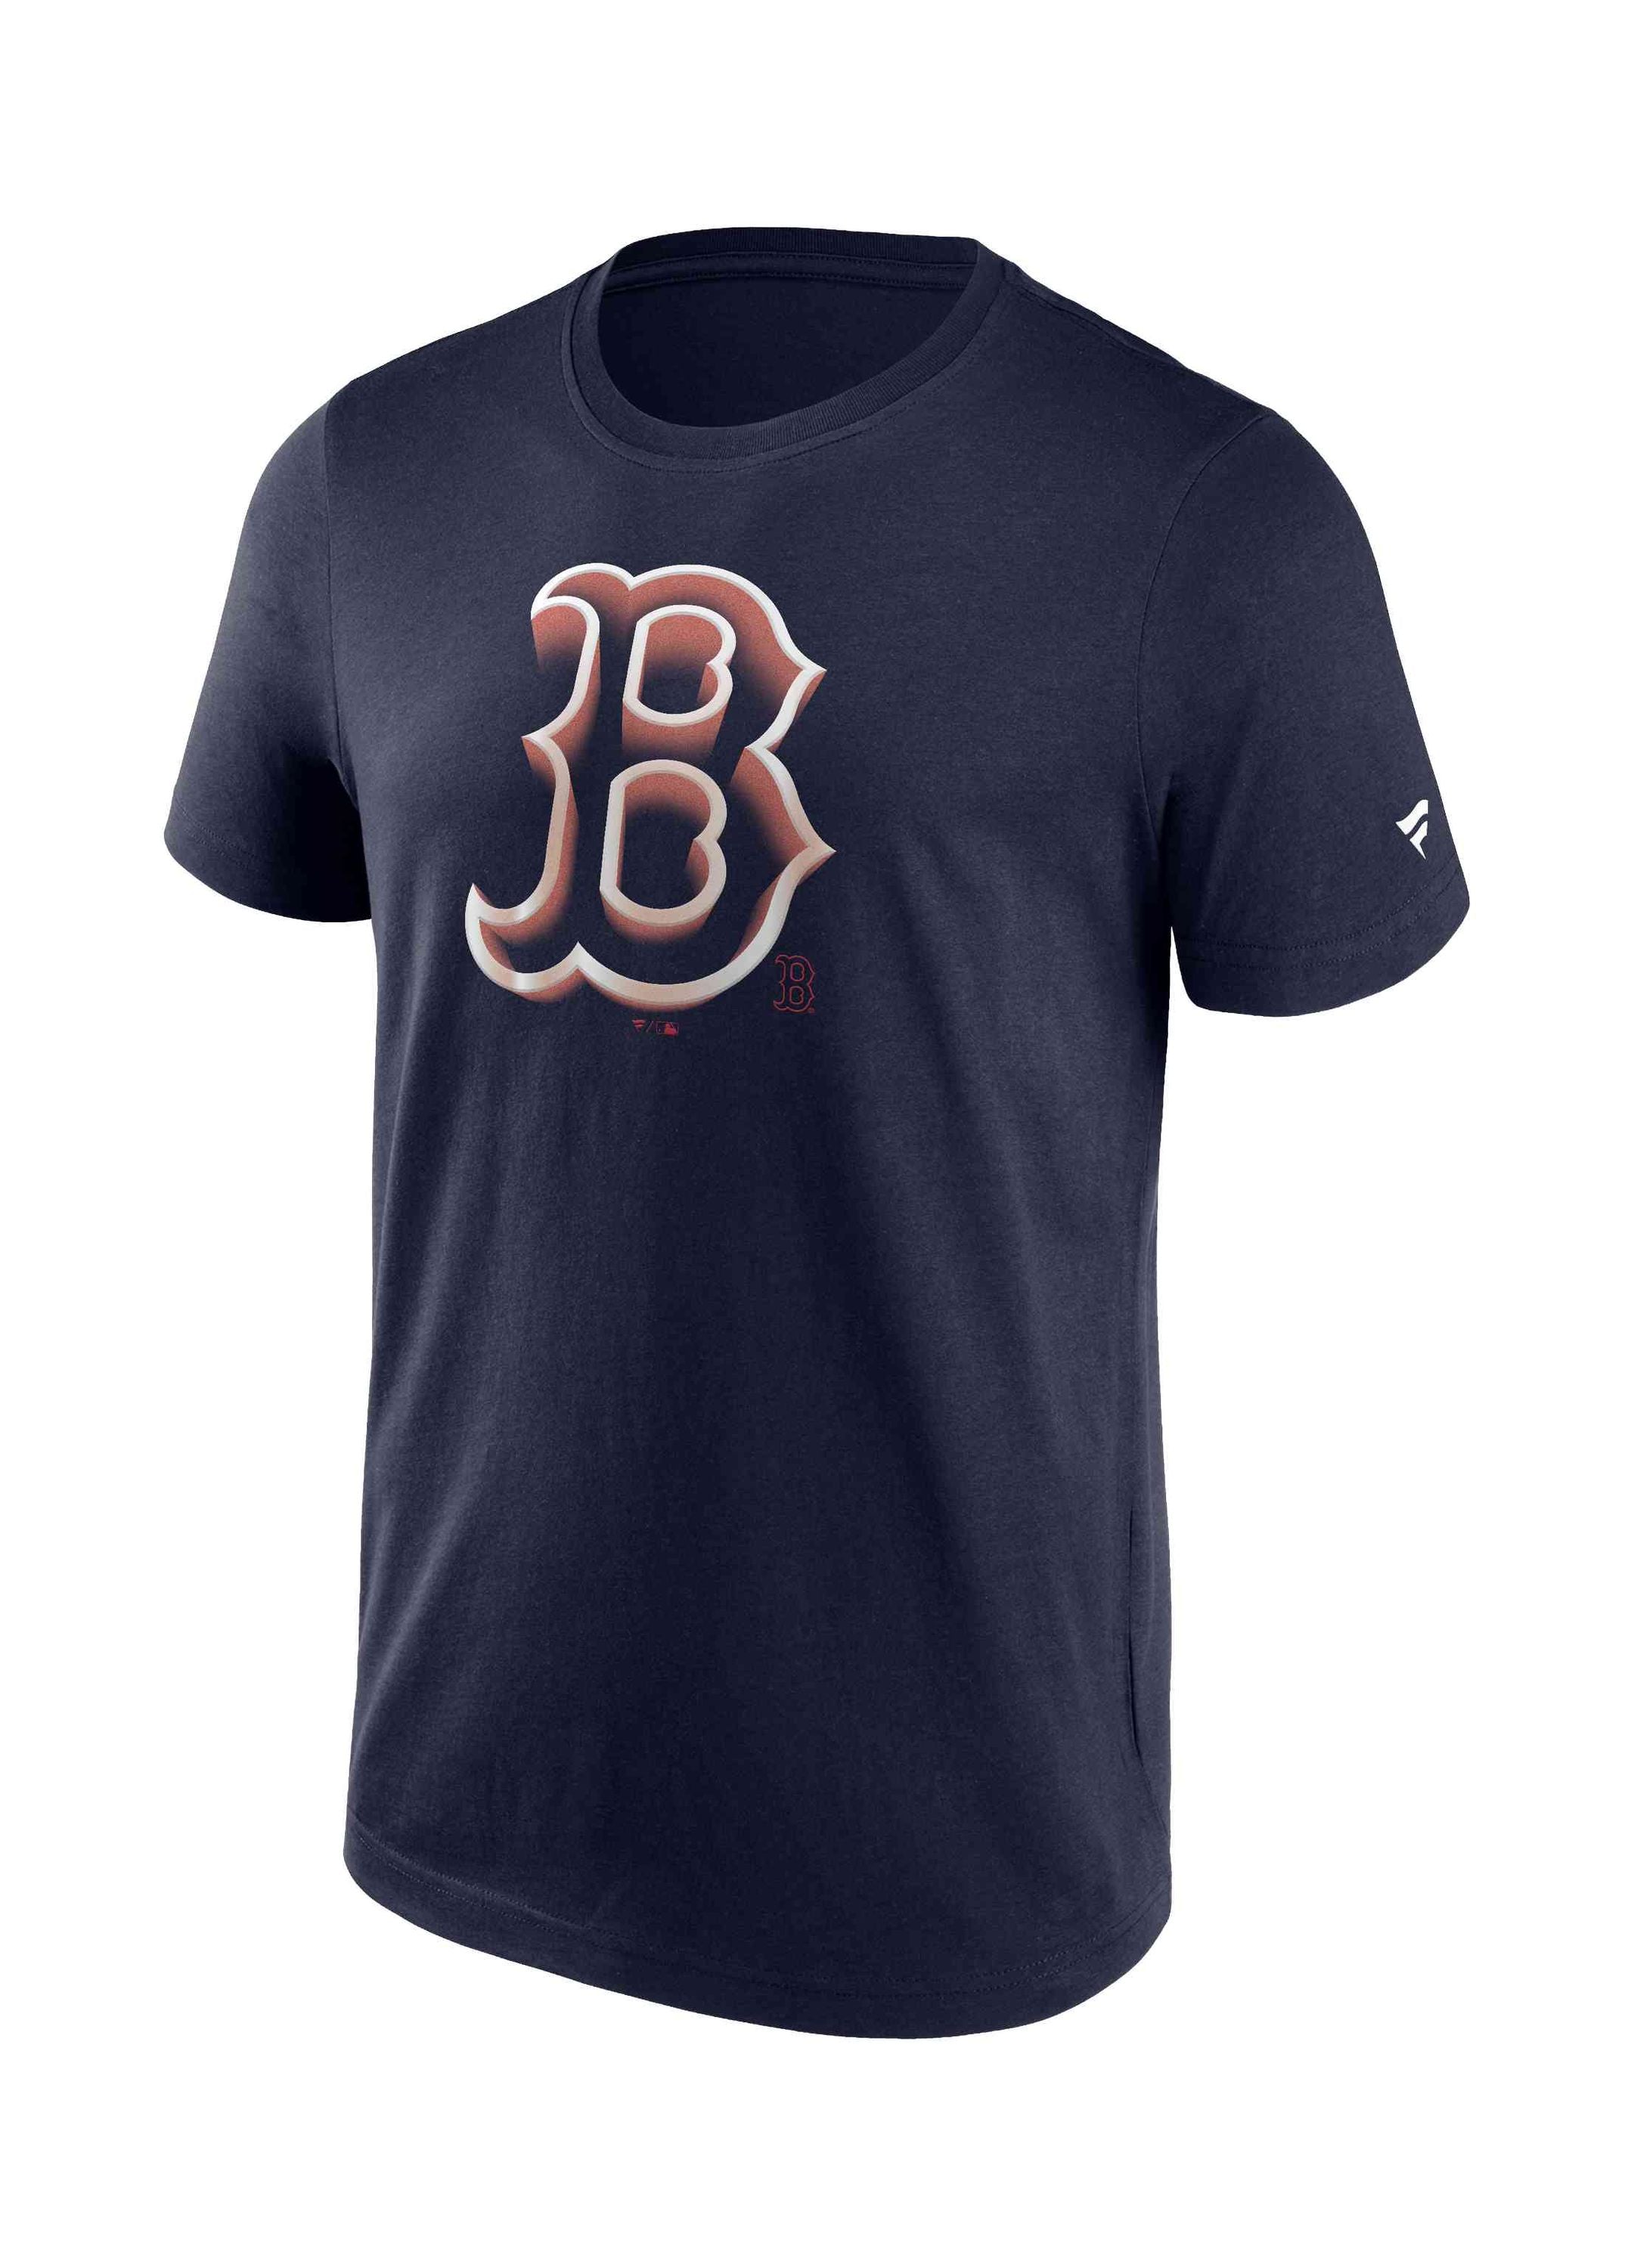 Fanatics - MLB Boston Red Sox Chrome Graphic T-Shirt